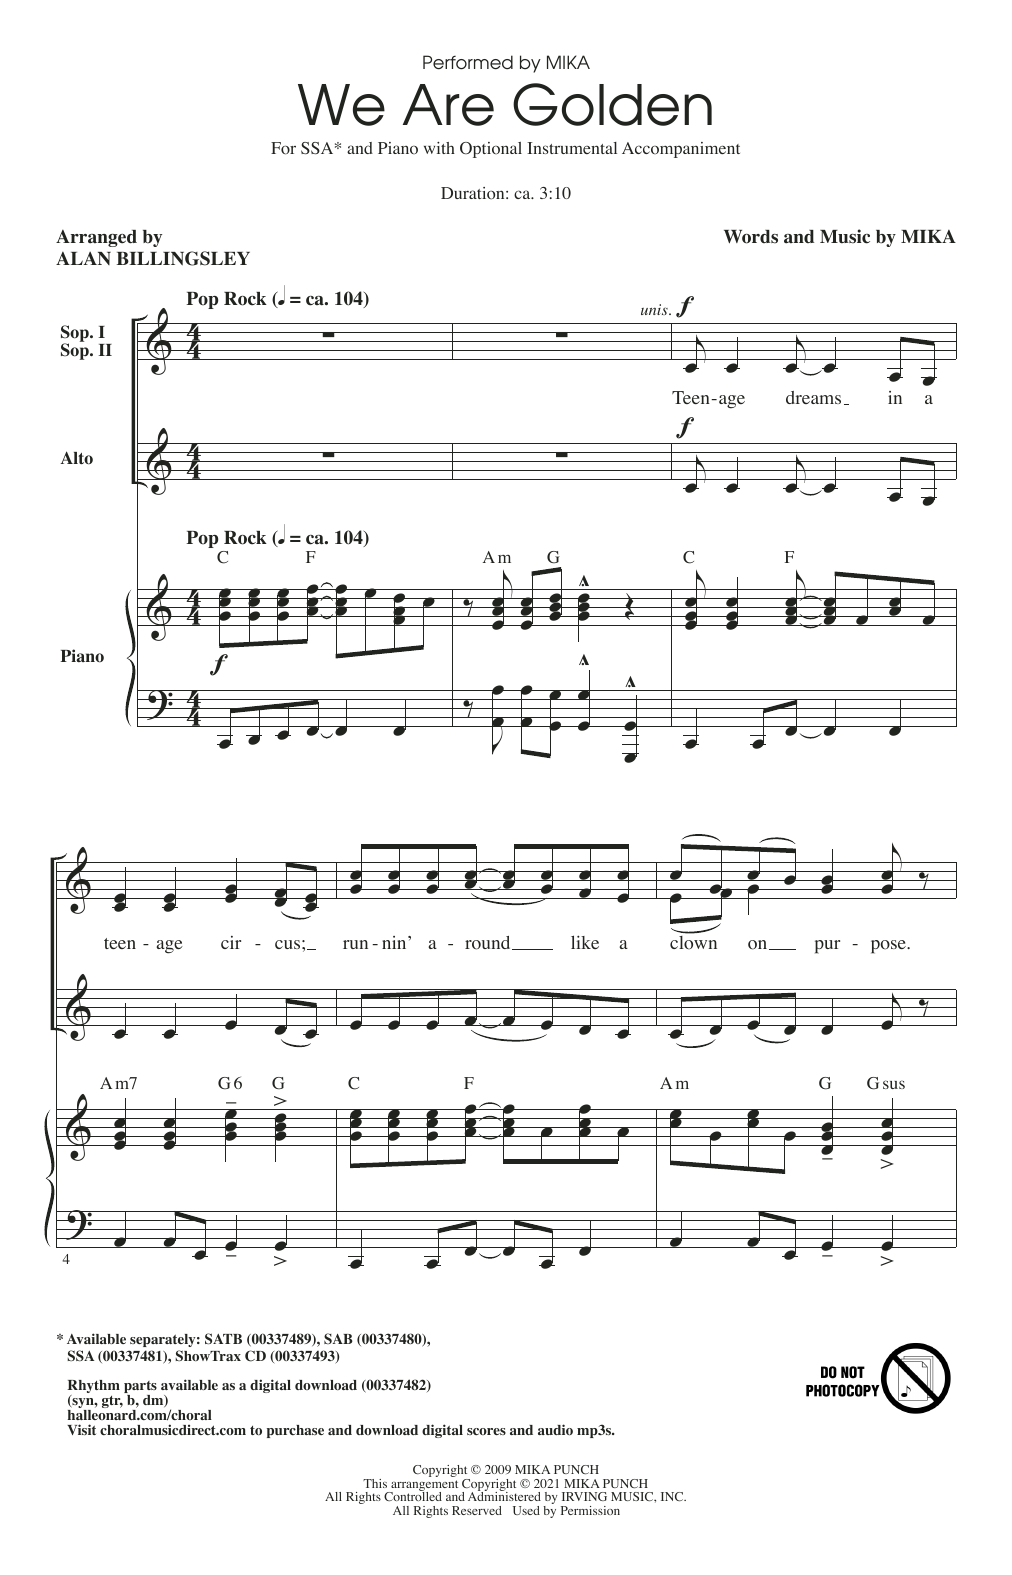 Mika We Are Golden (arr. Alan Billingsley) Sheet Music Notes & Chords for SAB Choir - Download or Print PDF